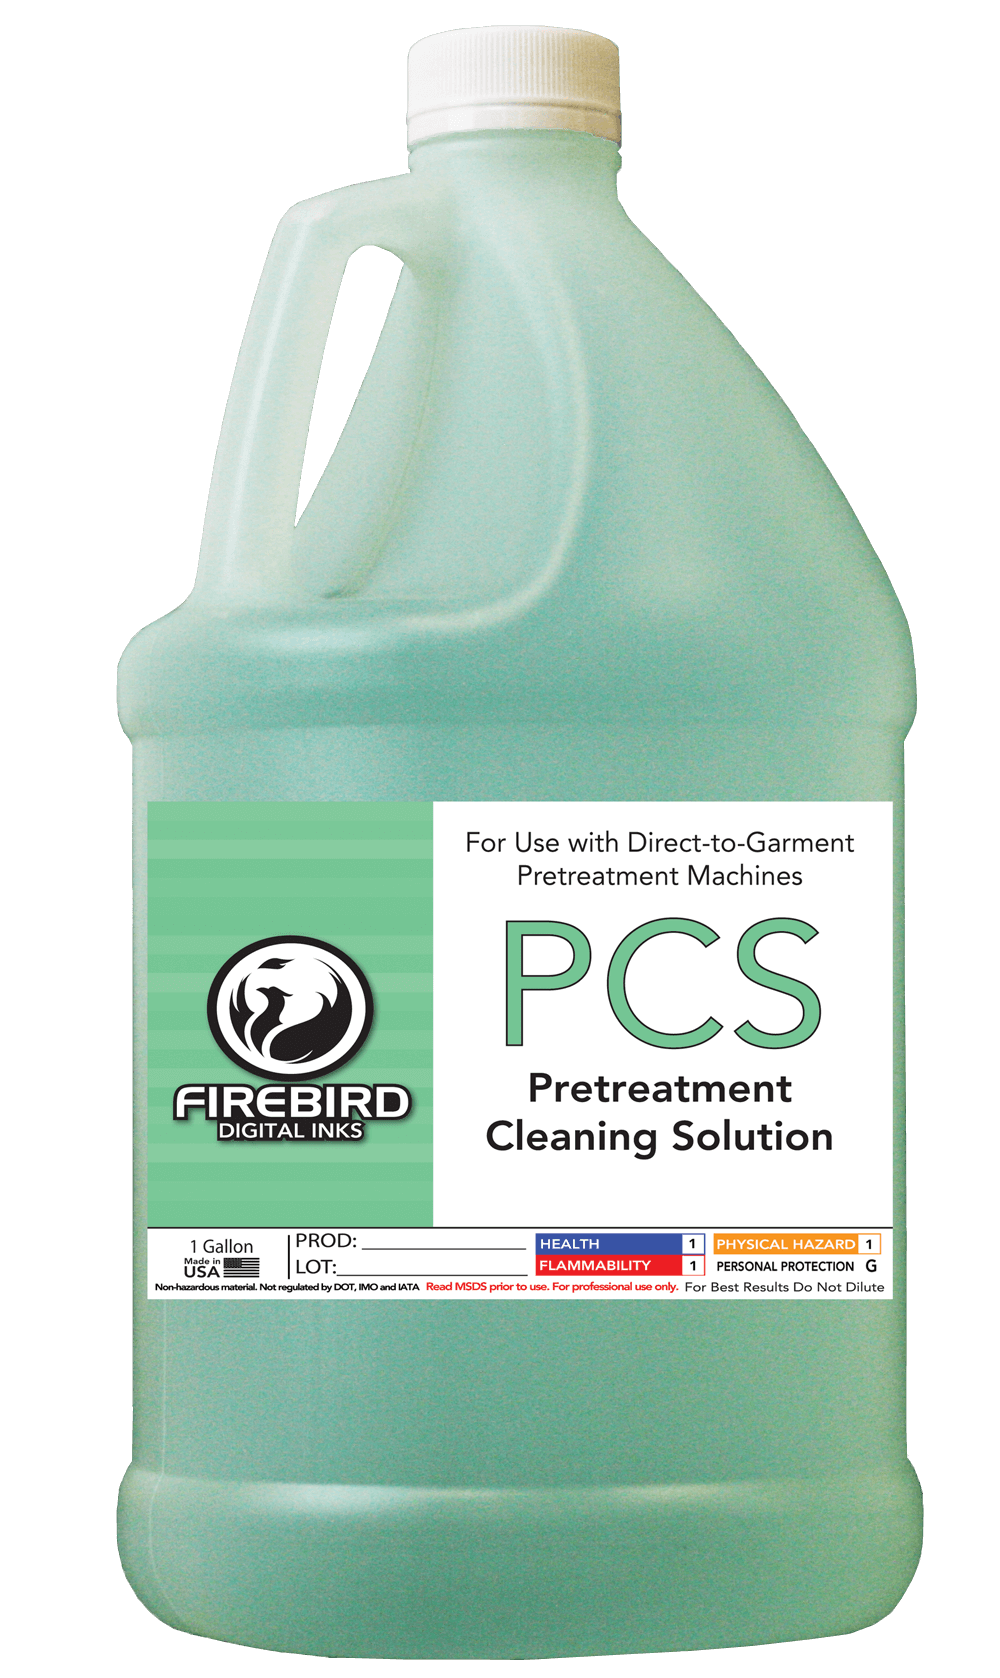 FIREBIRD Pretreatment Cleaning Solution